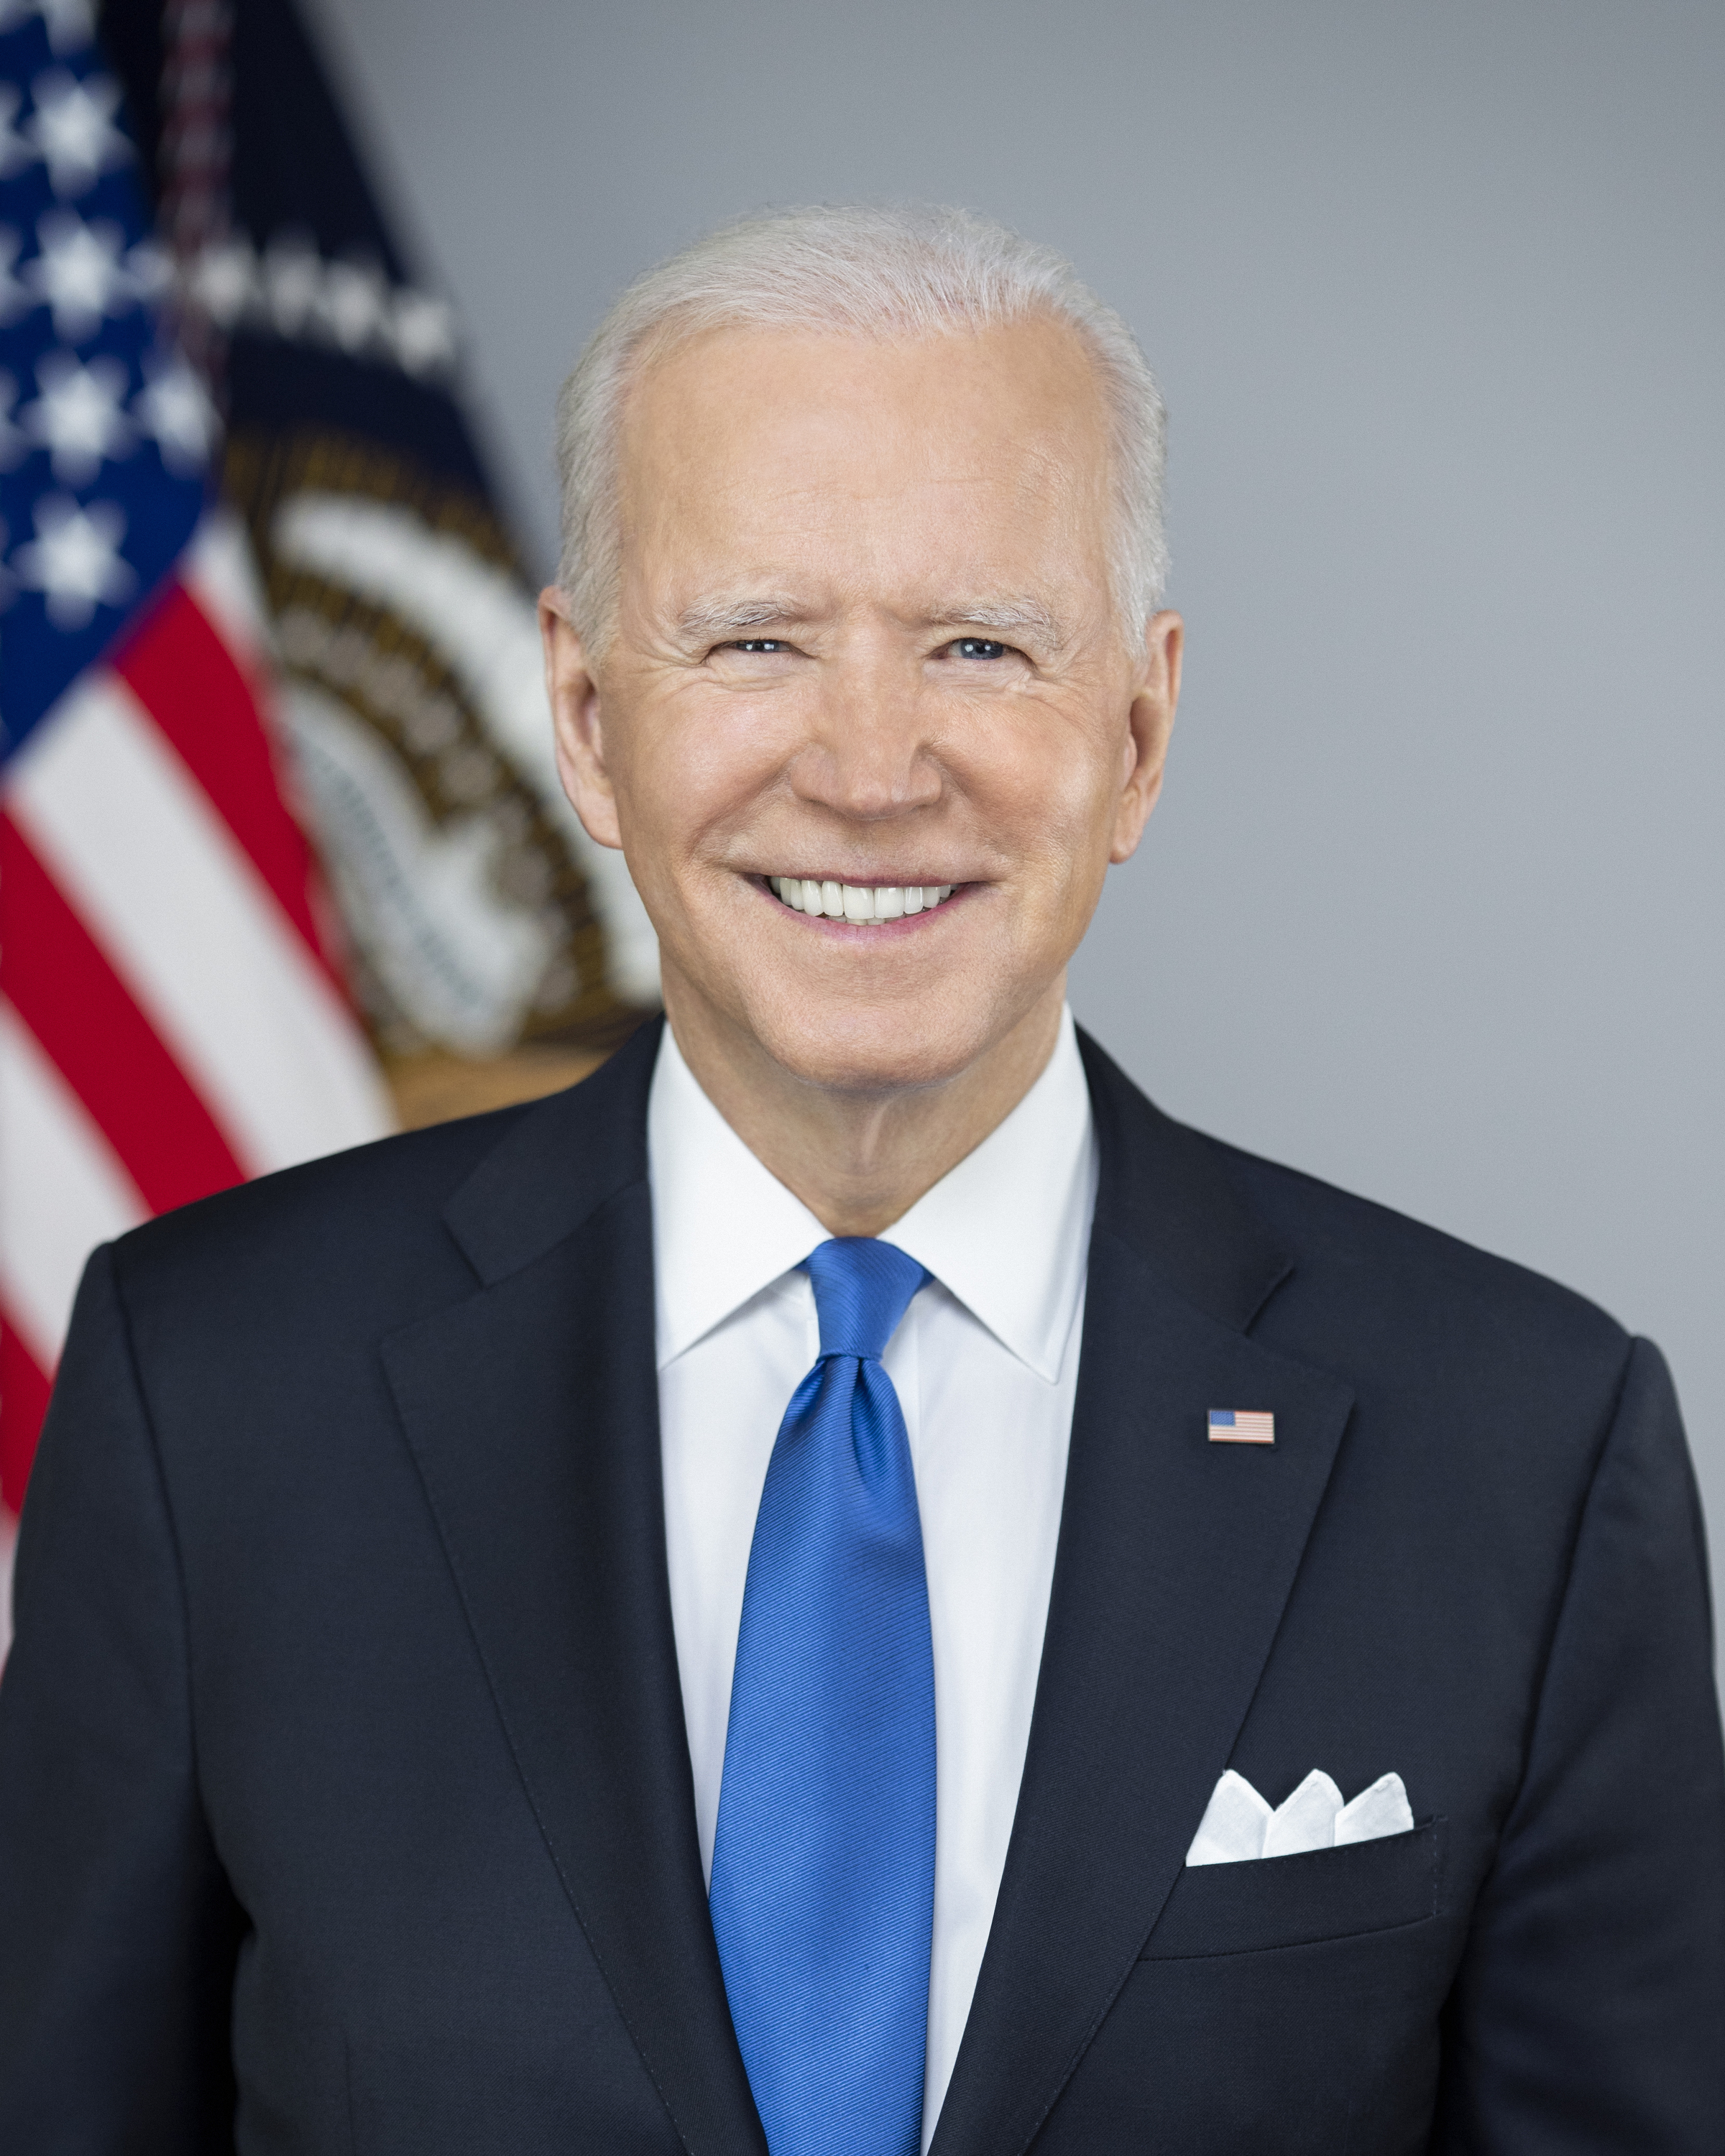 Joe Biden U.S. Presidency